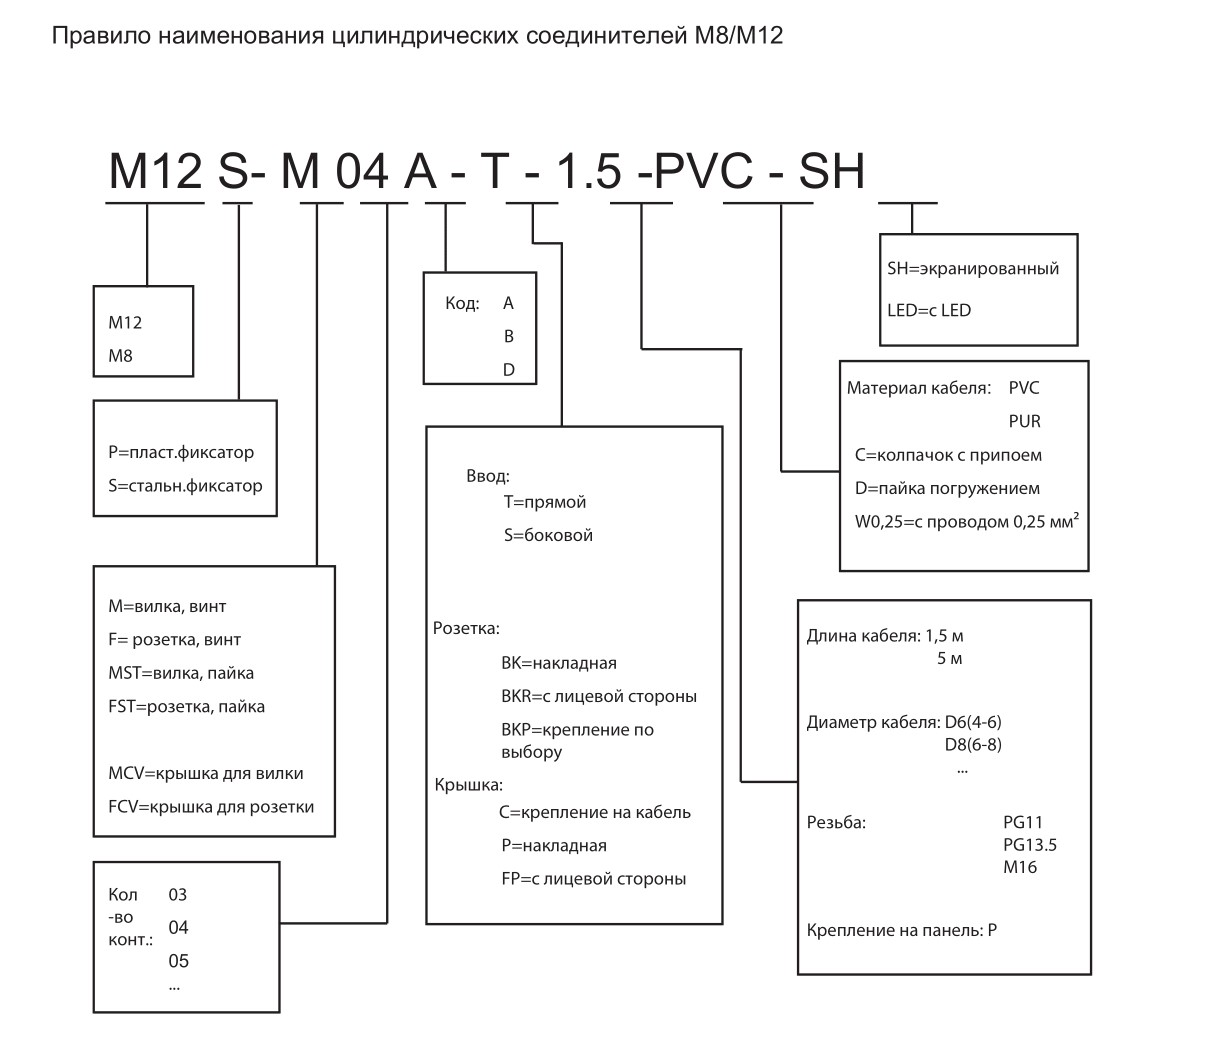 Цилиндрический соединитель-вилка M12-M04D-BK-PG9-C 1630043011006: Структура обозначения